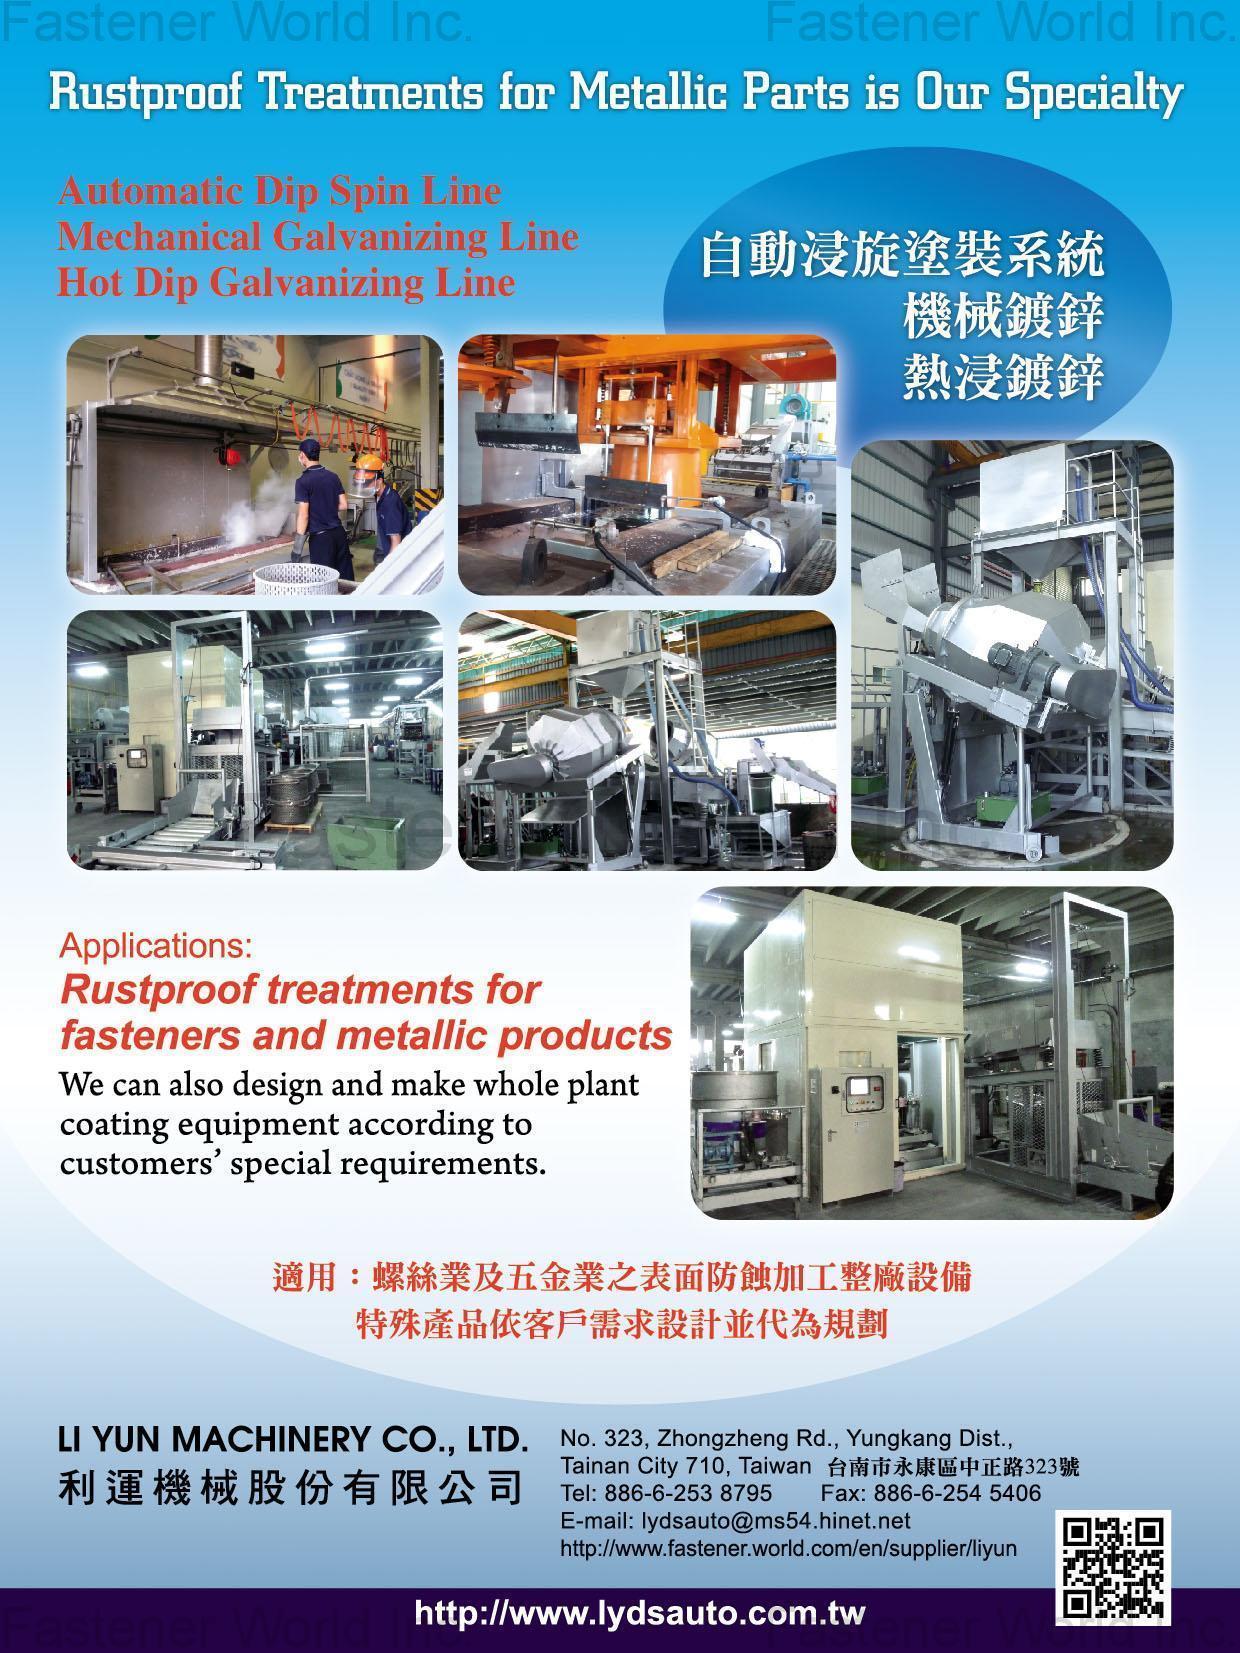 LI YUN MACHINERY CO., LTD. , Automatic Dip Spin Line, Mechanical Galvanizing Line, Hot Dip Galvanizing Line